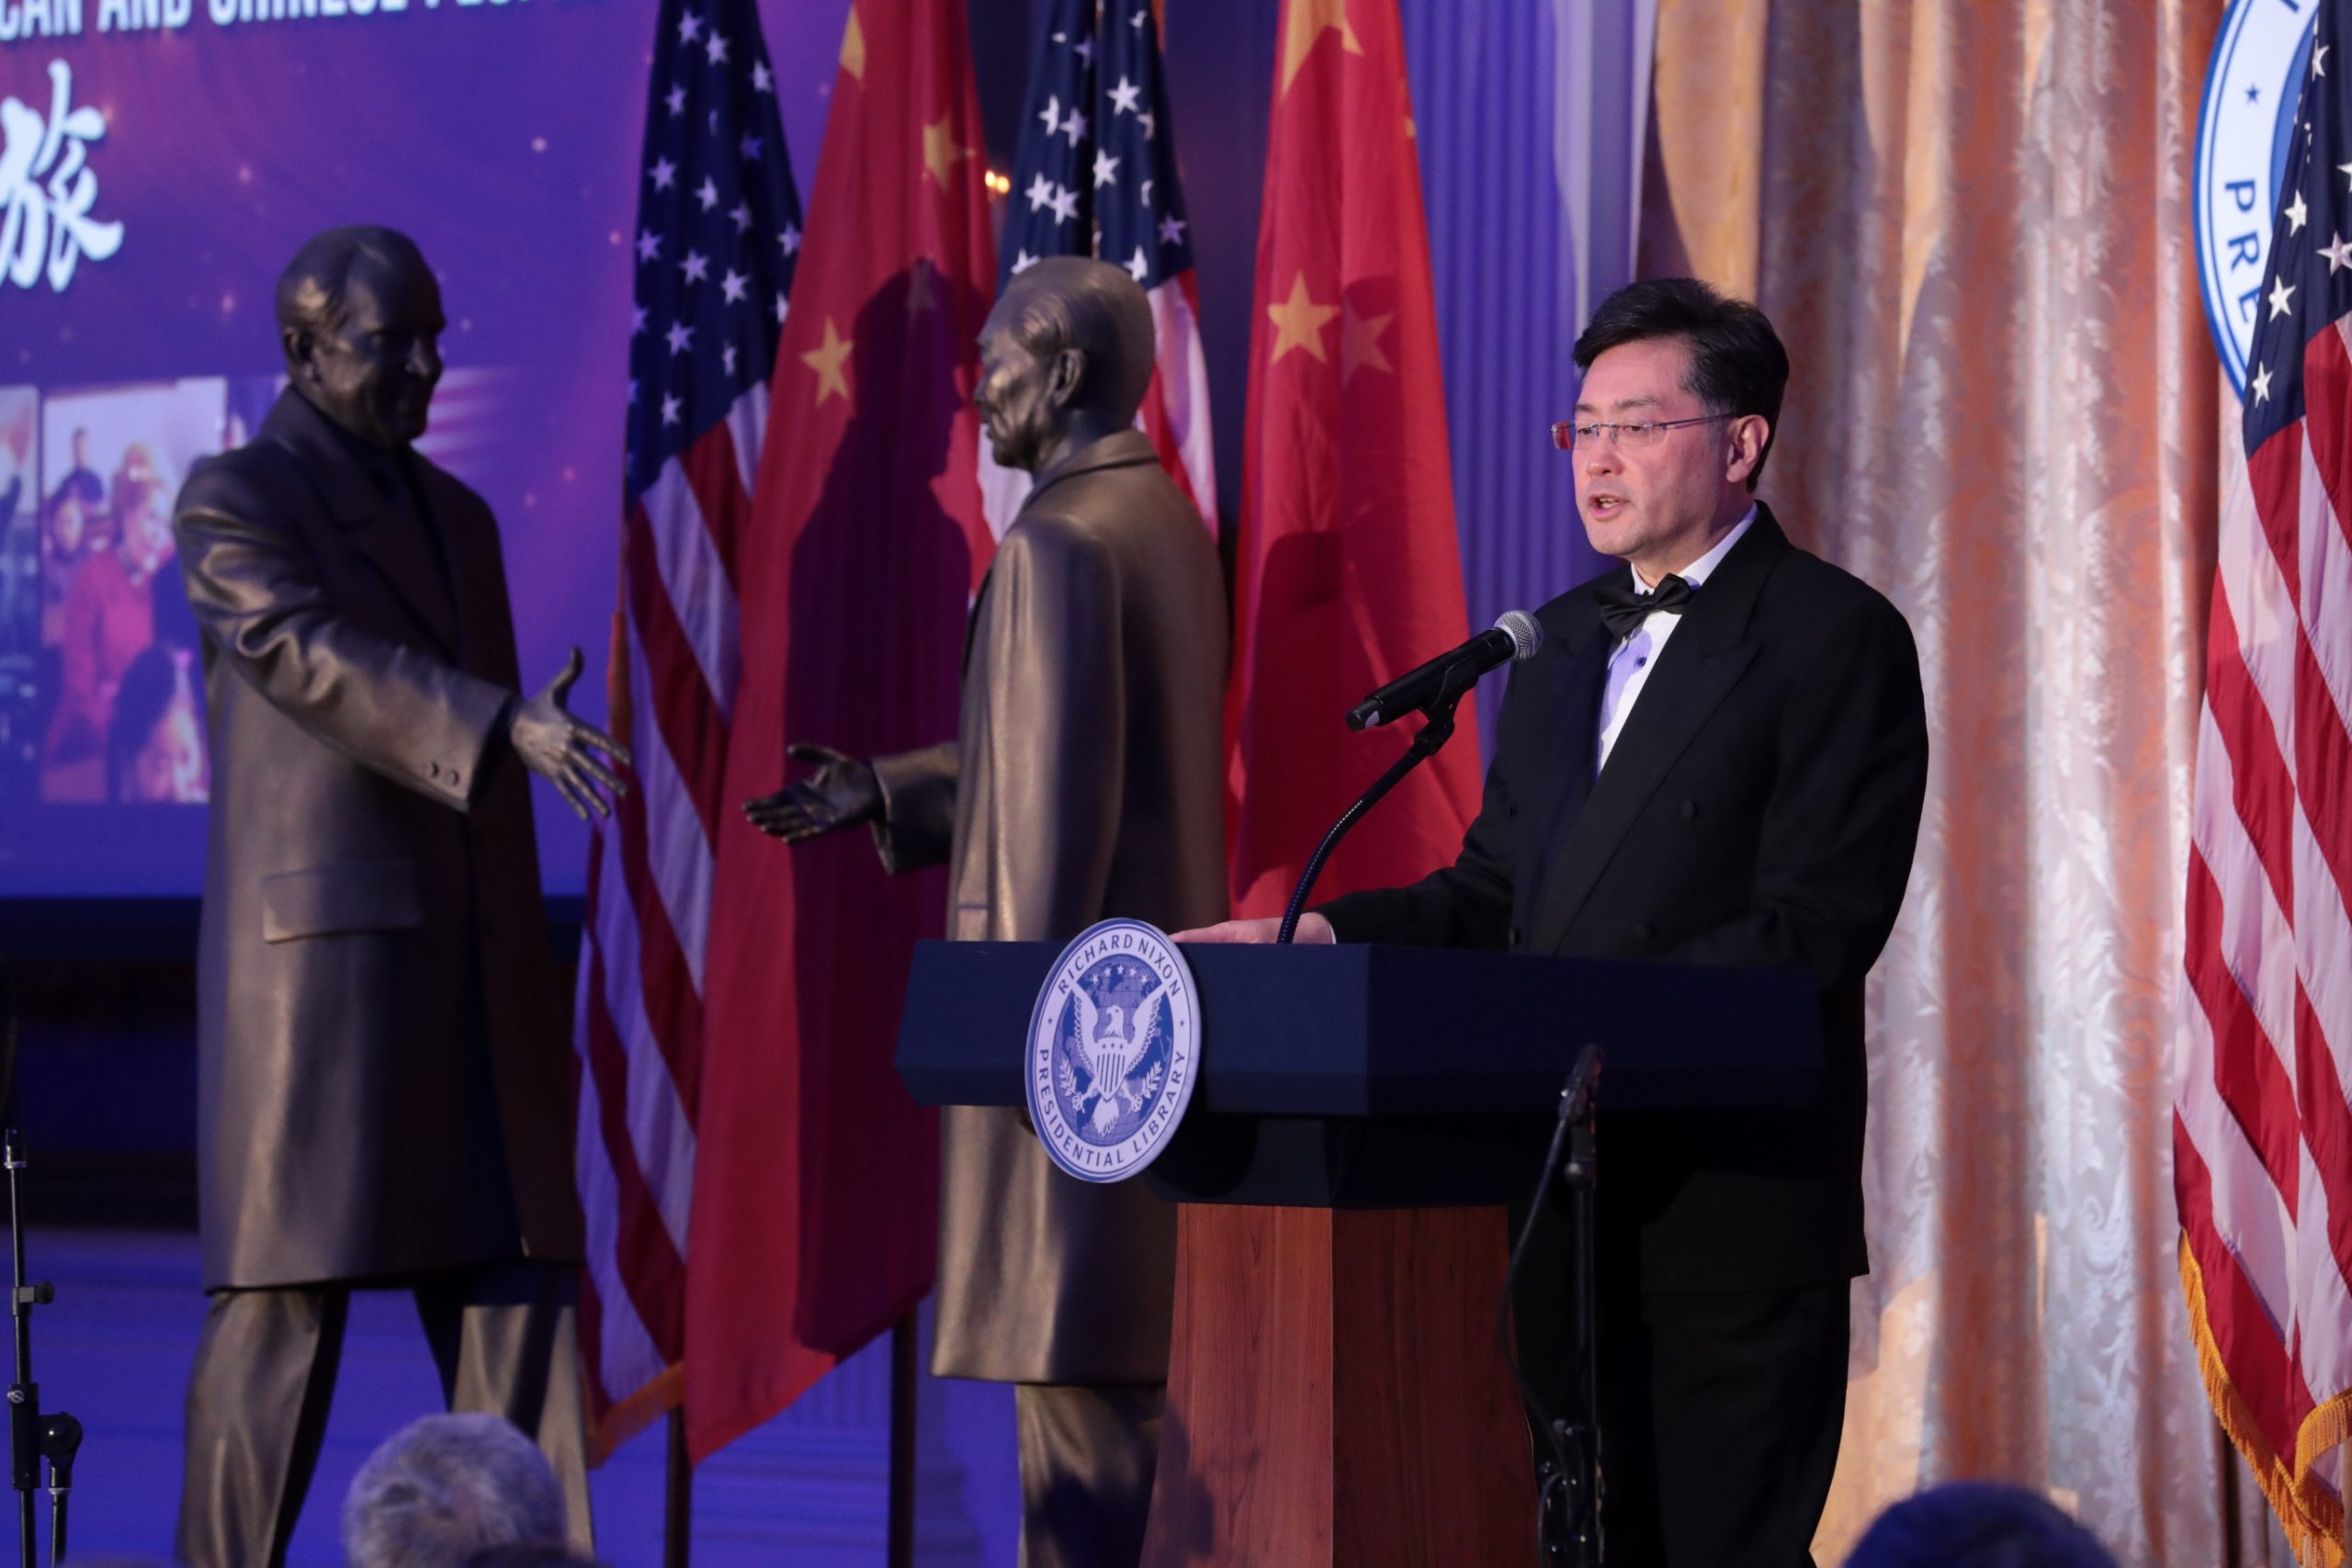 U.S.-China Pingpong Diplomacy, 50 Years Later : NPR